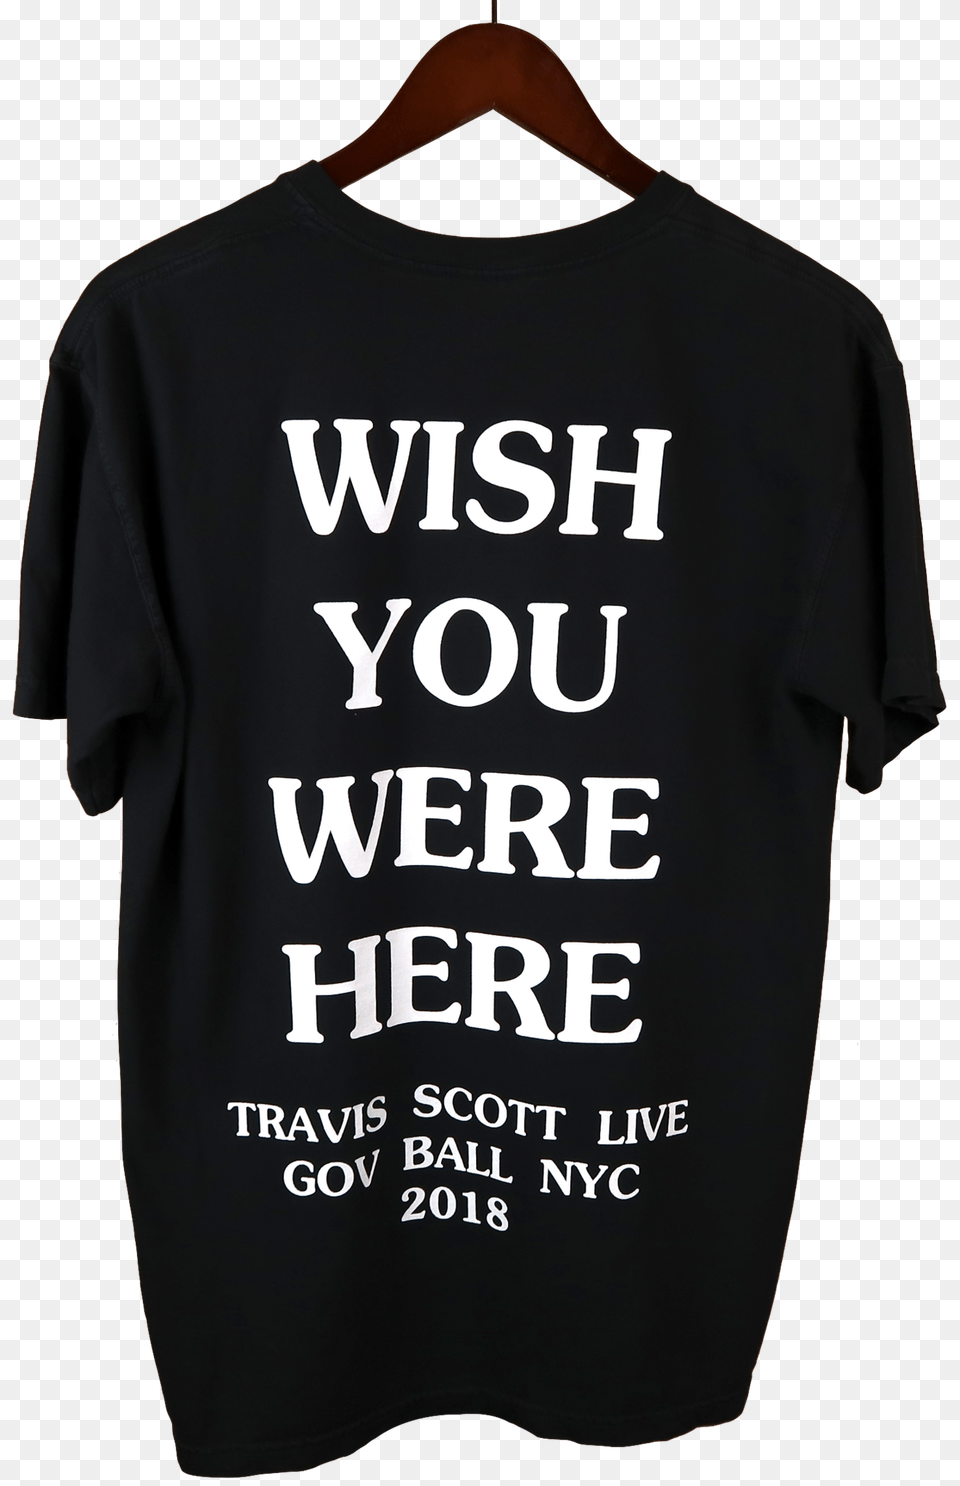 Travis Scott Astroworld Gov Ball Nyc T Shirt Hipsurge, Clothing, T-shirt Free Png